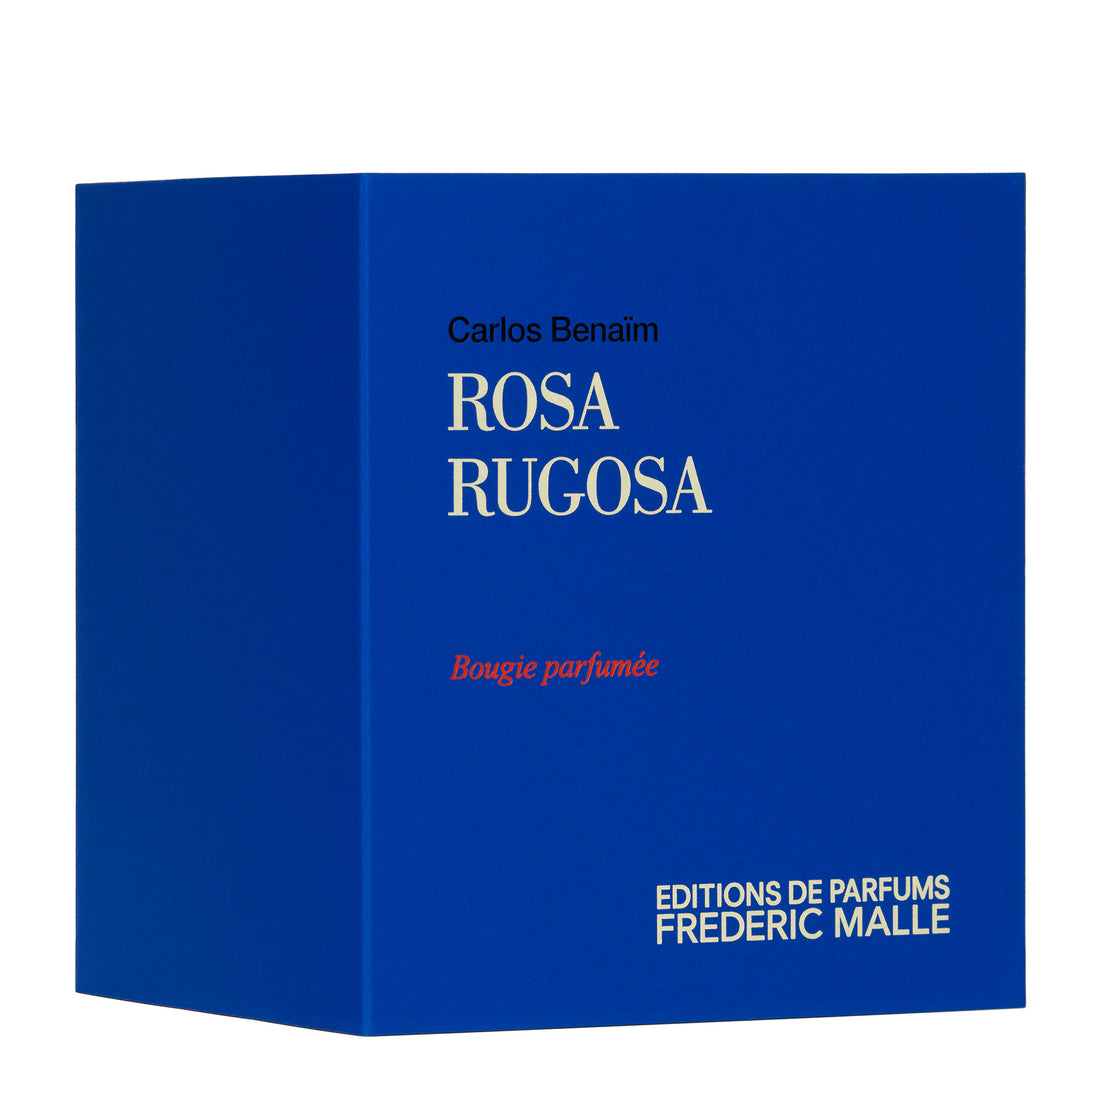 Rosa Rugosa